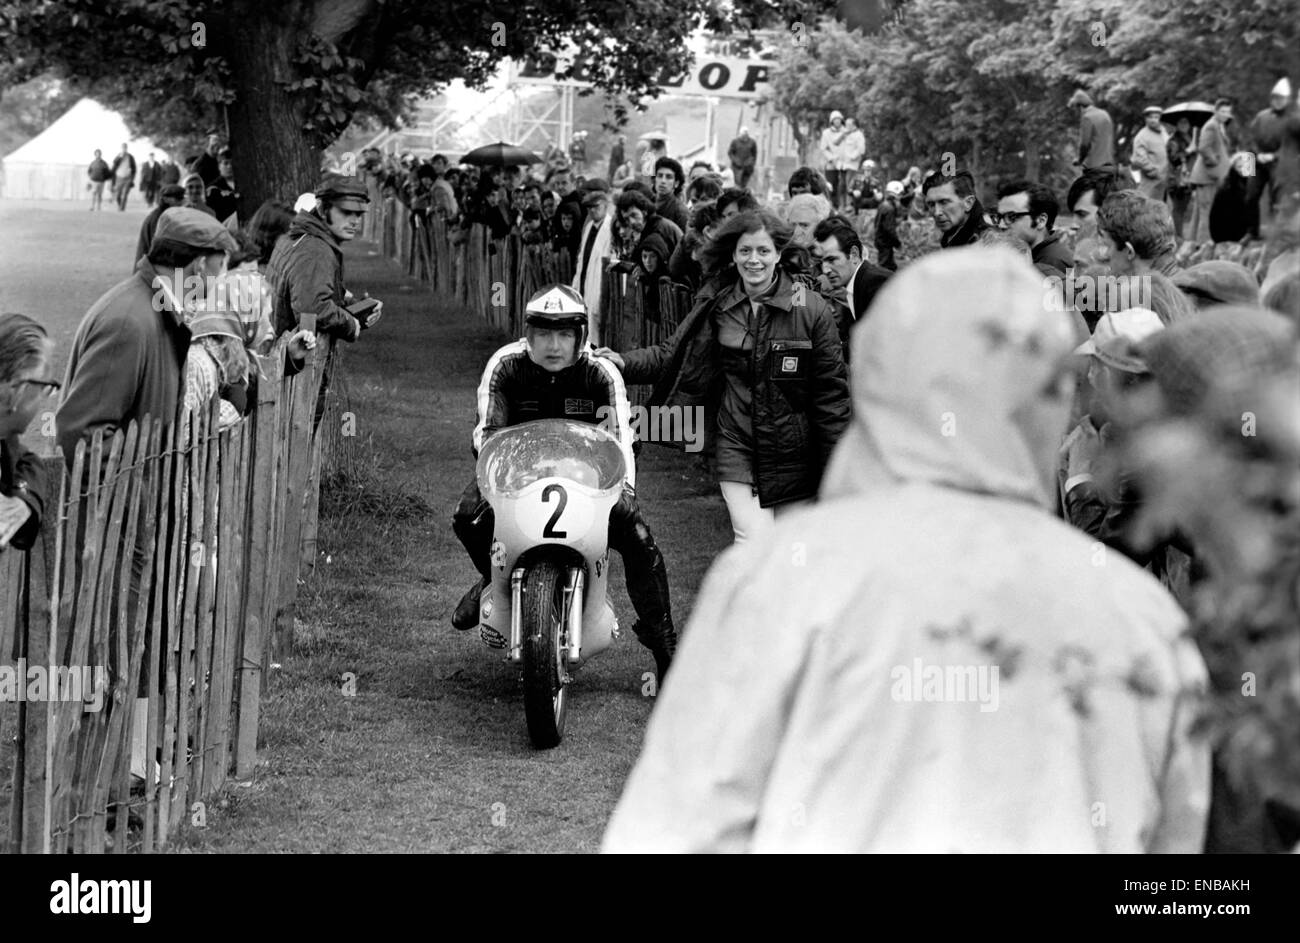 The International Isle of Man TT 350cc Junior Race, 7th June 1971. Stock Photo